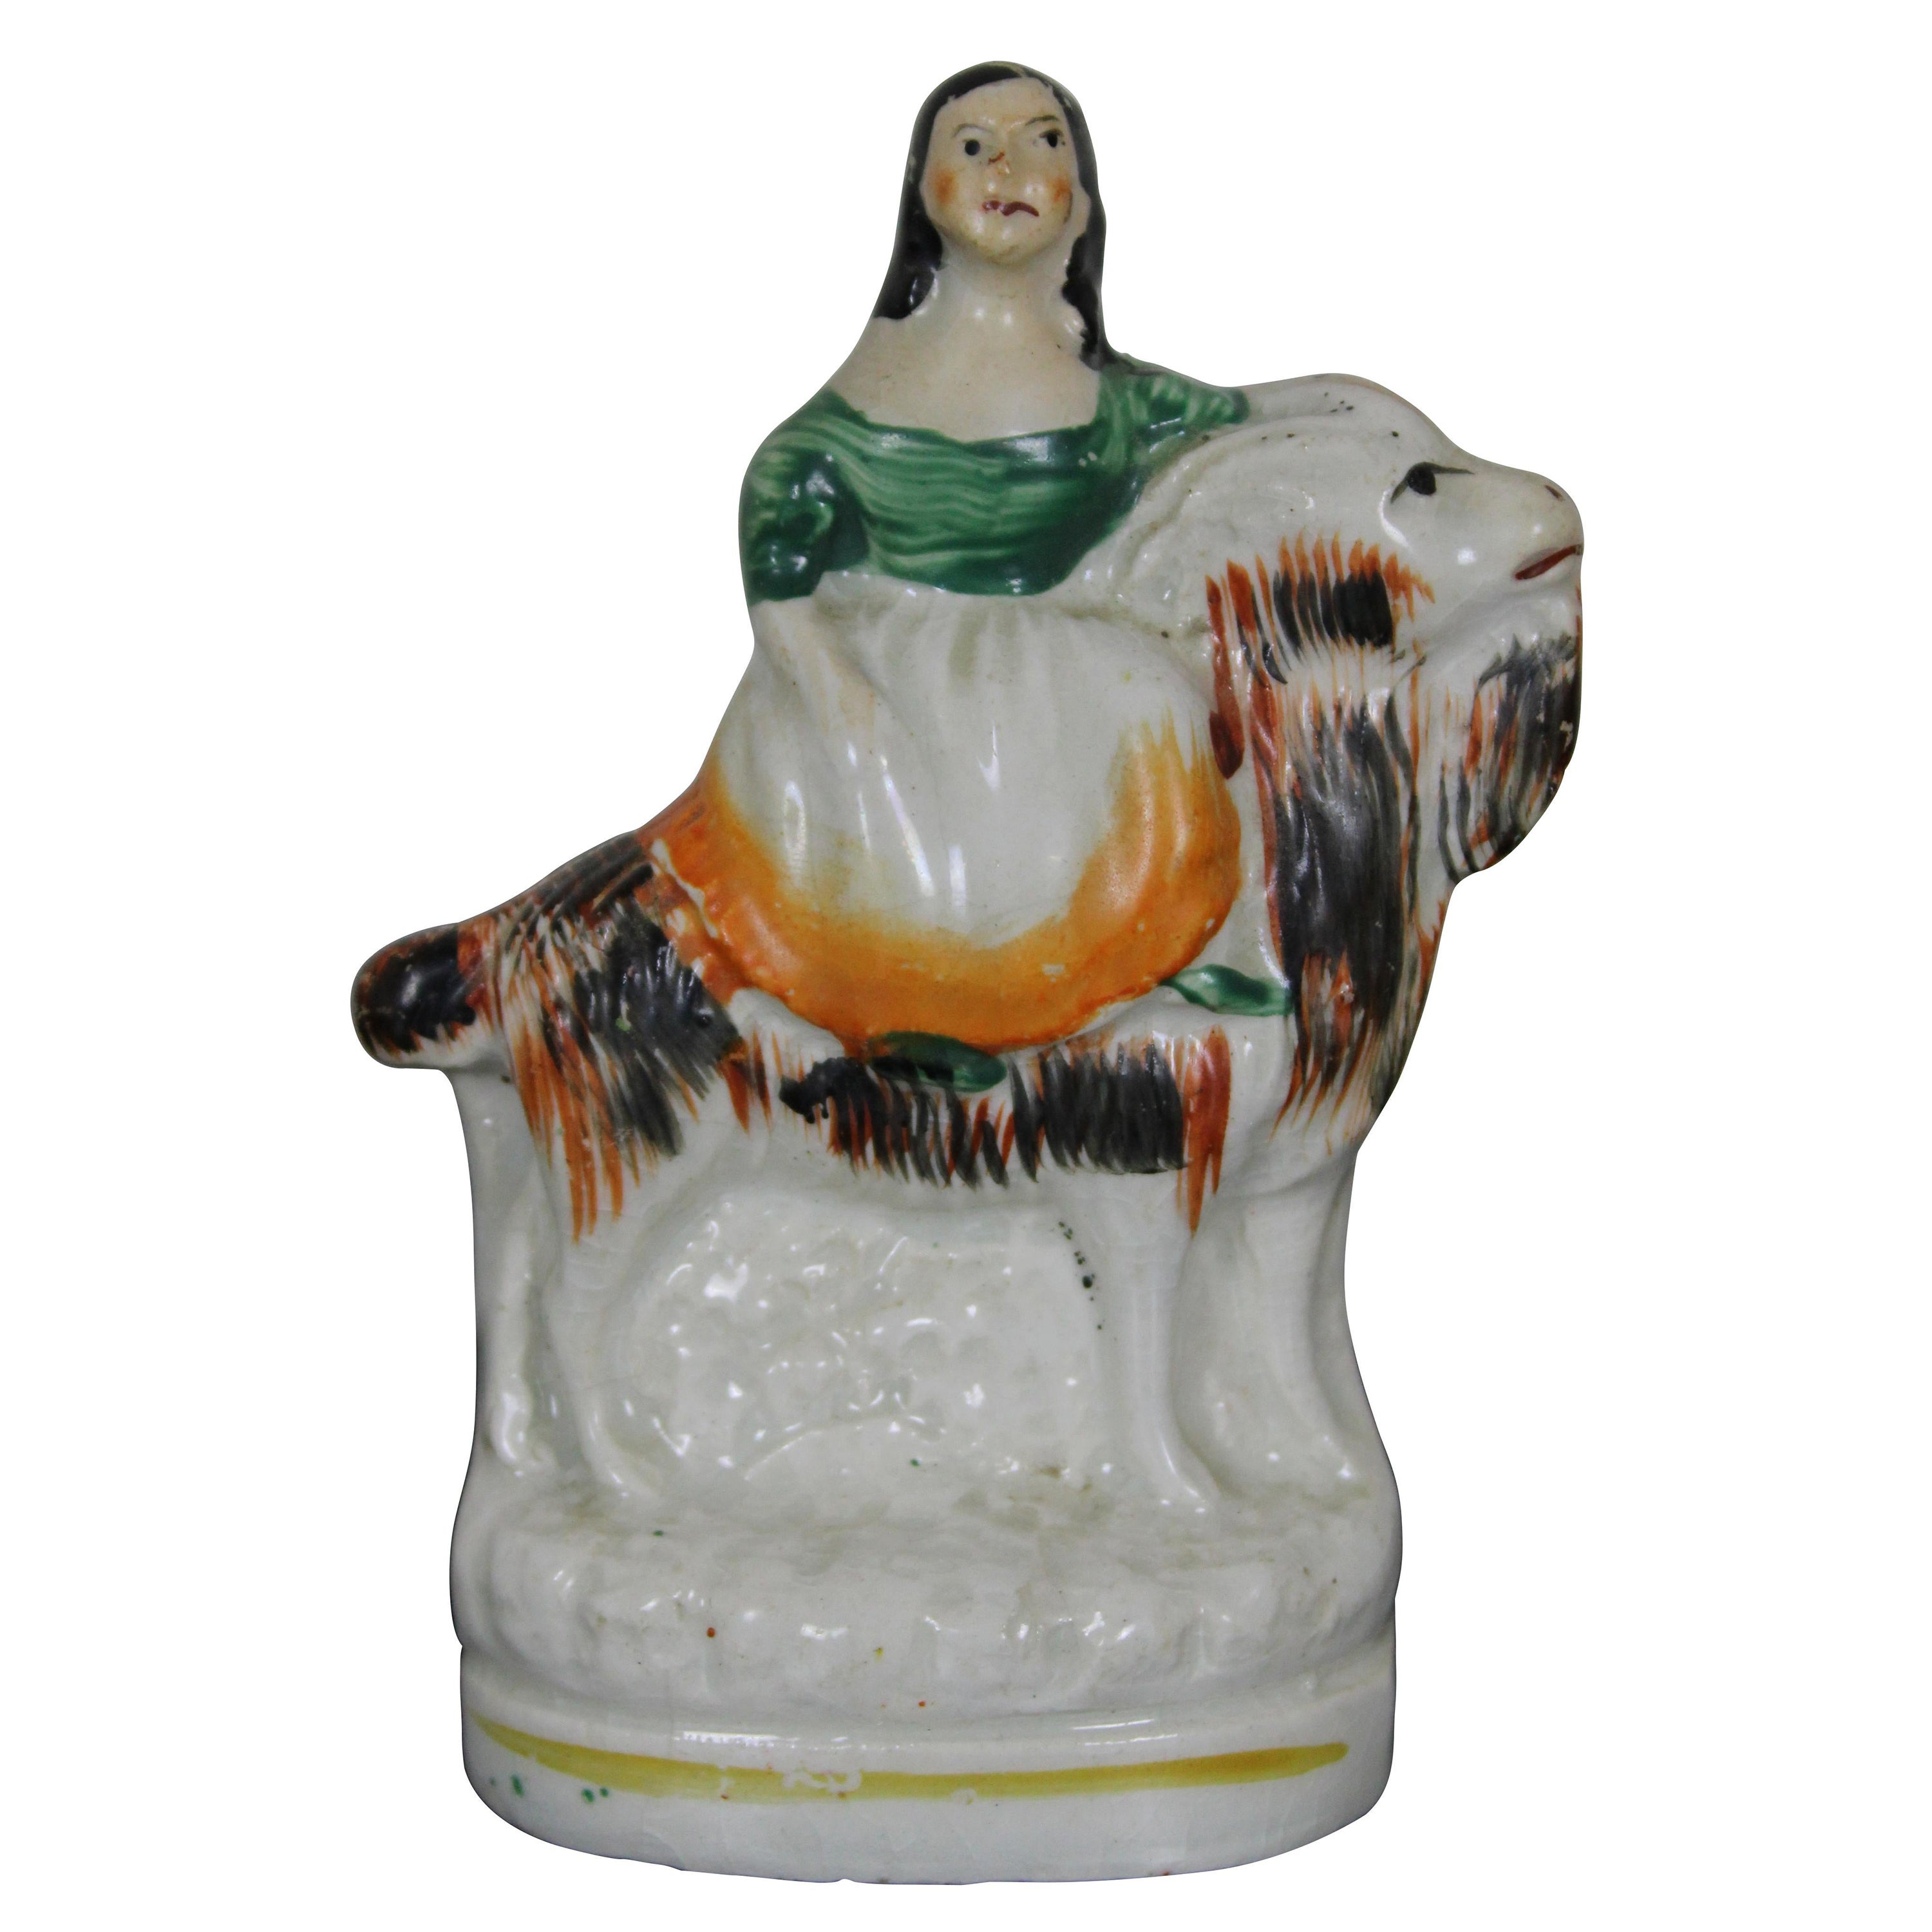 Antique English Staffordshire Porcelain Figurine Girl Riding a Goat